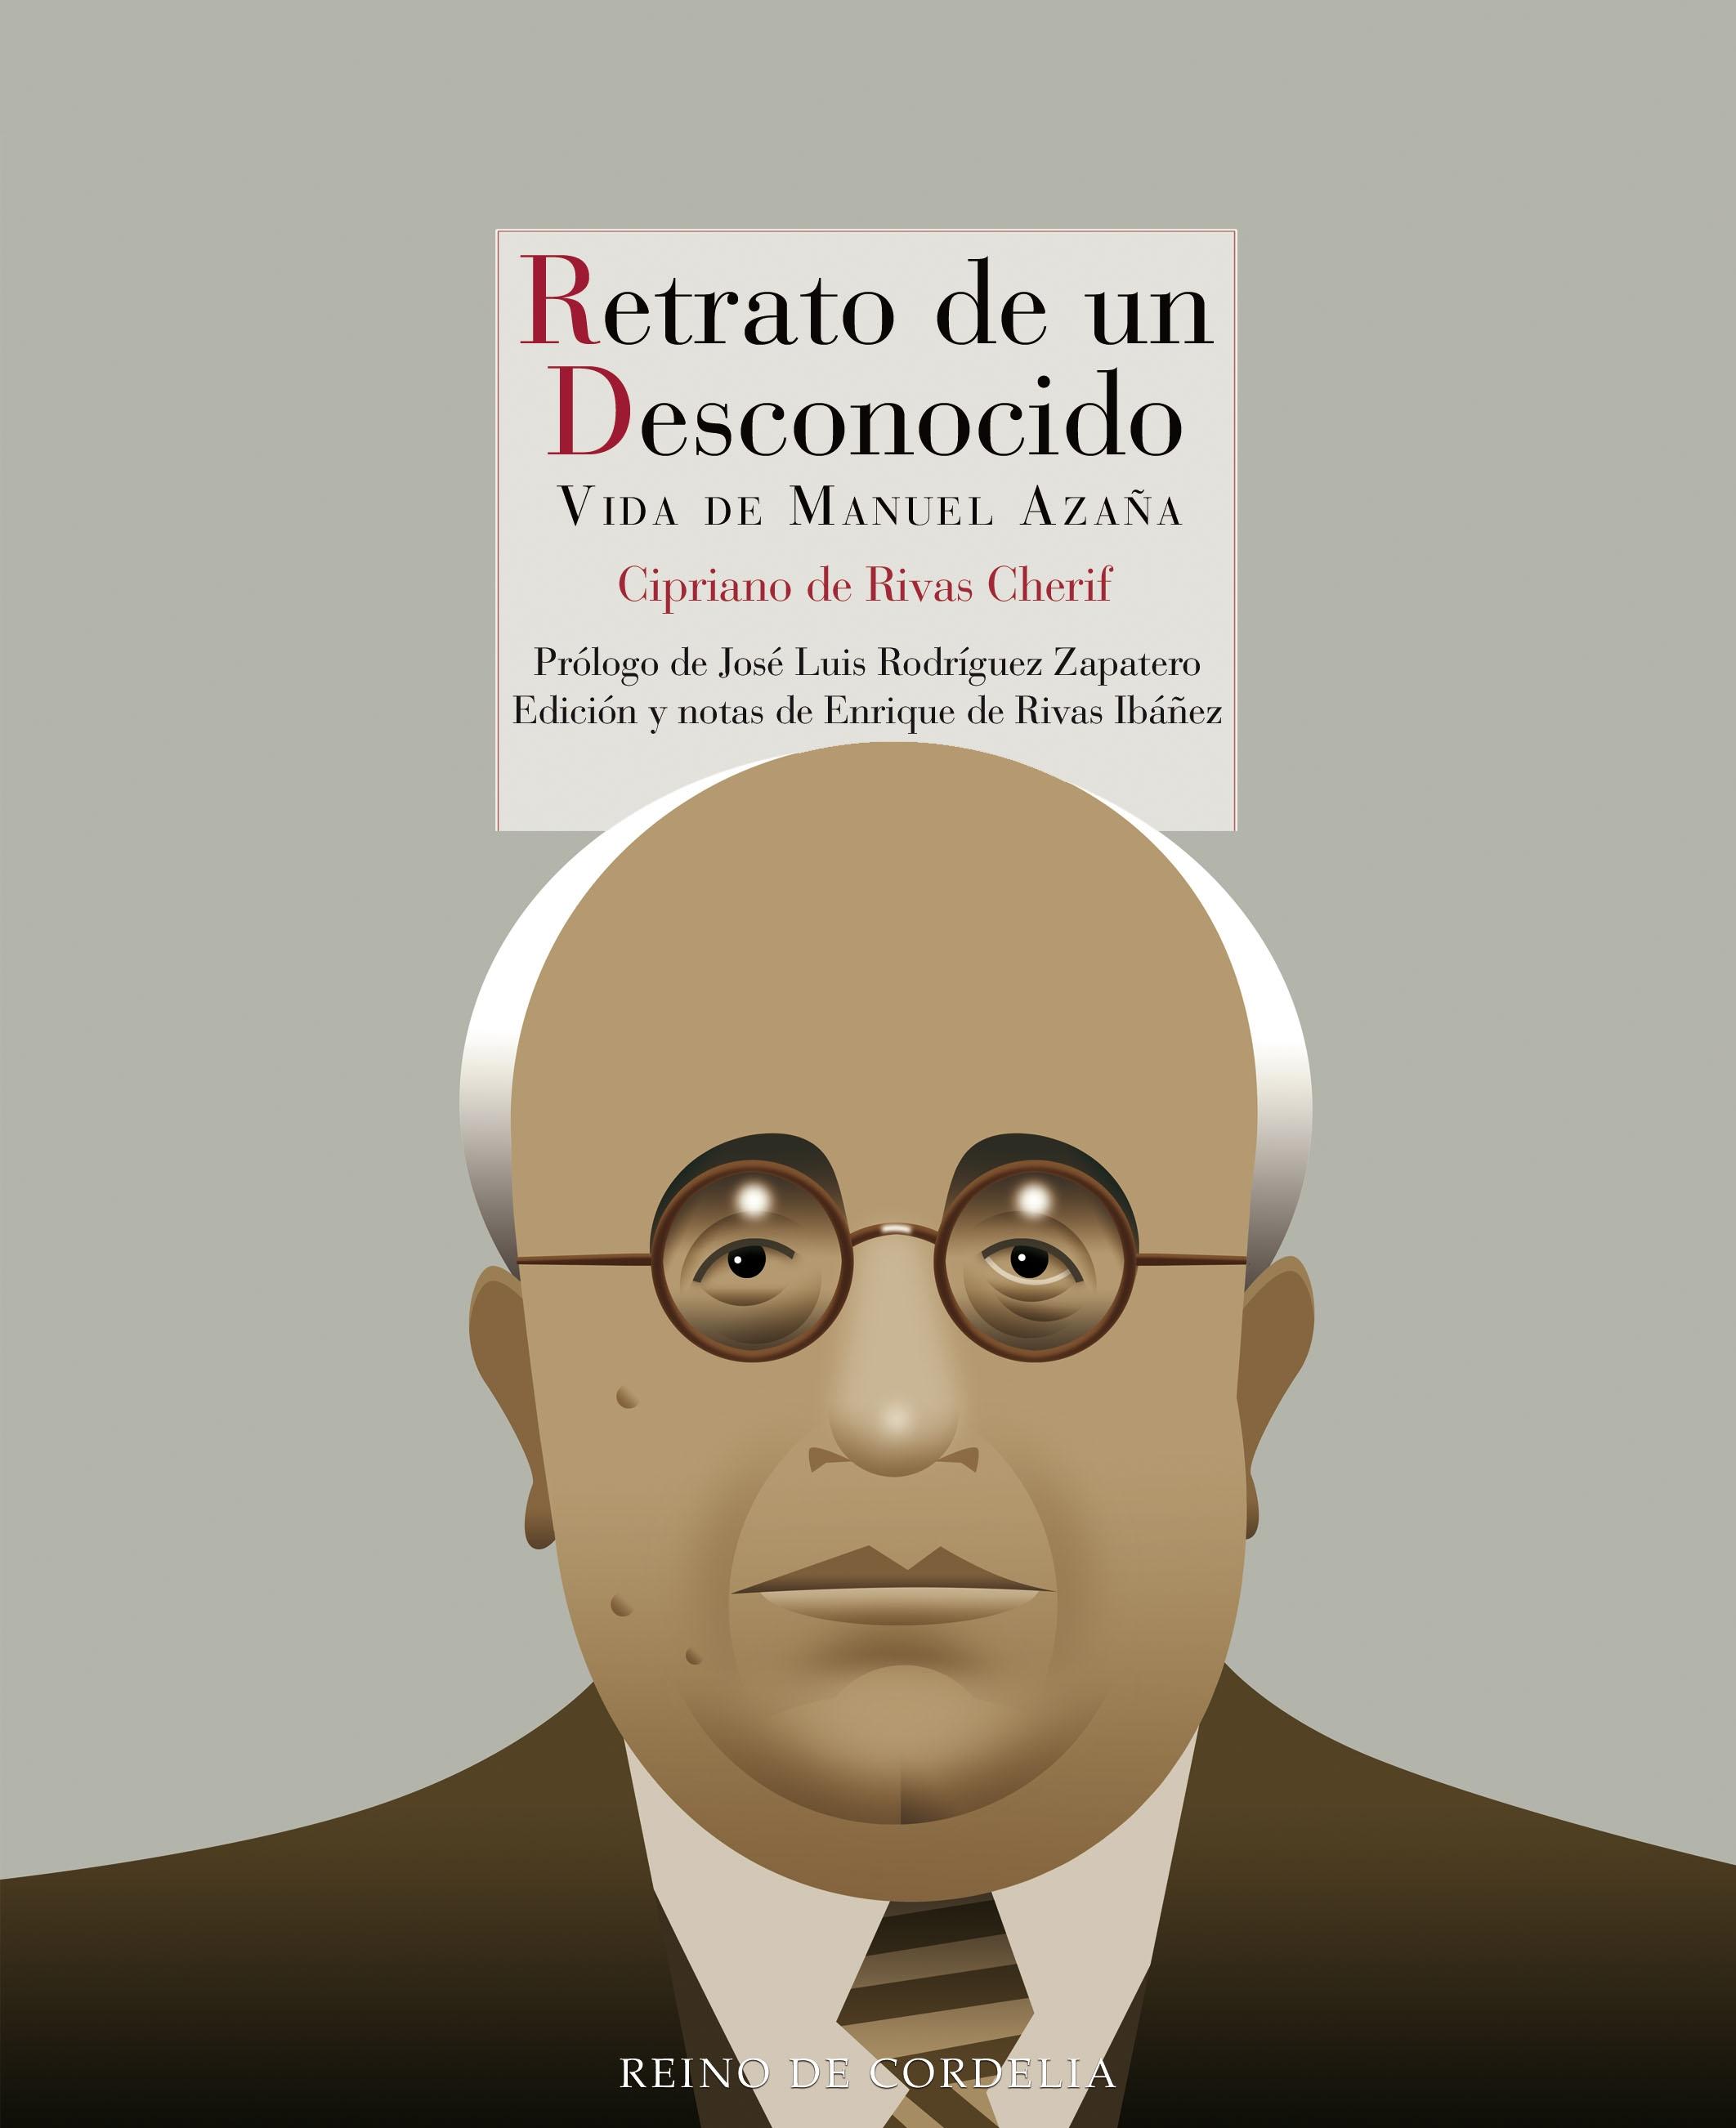 Retrato de un Desconocido "Vida de Manuel Azaña". 